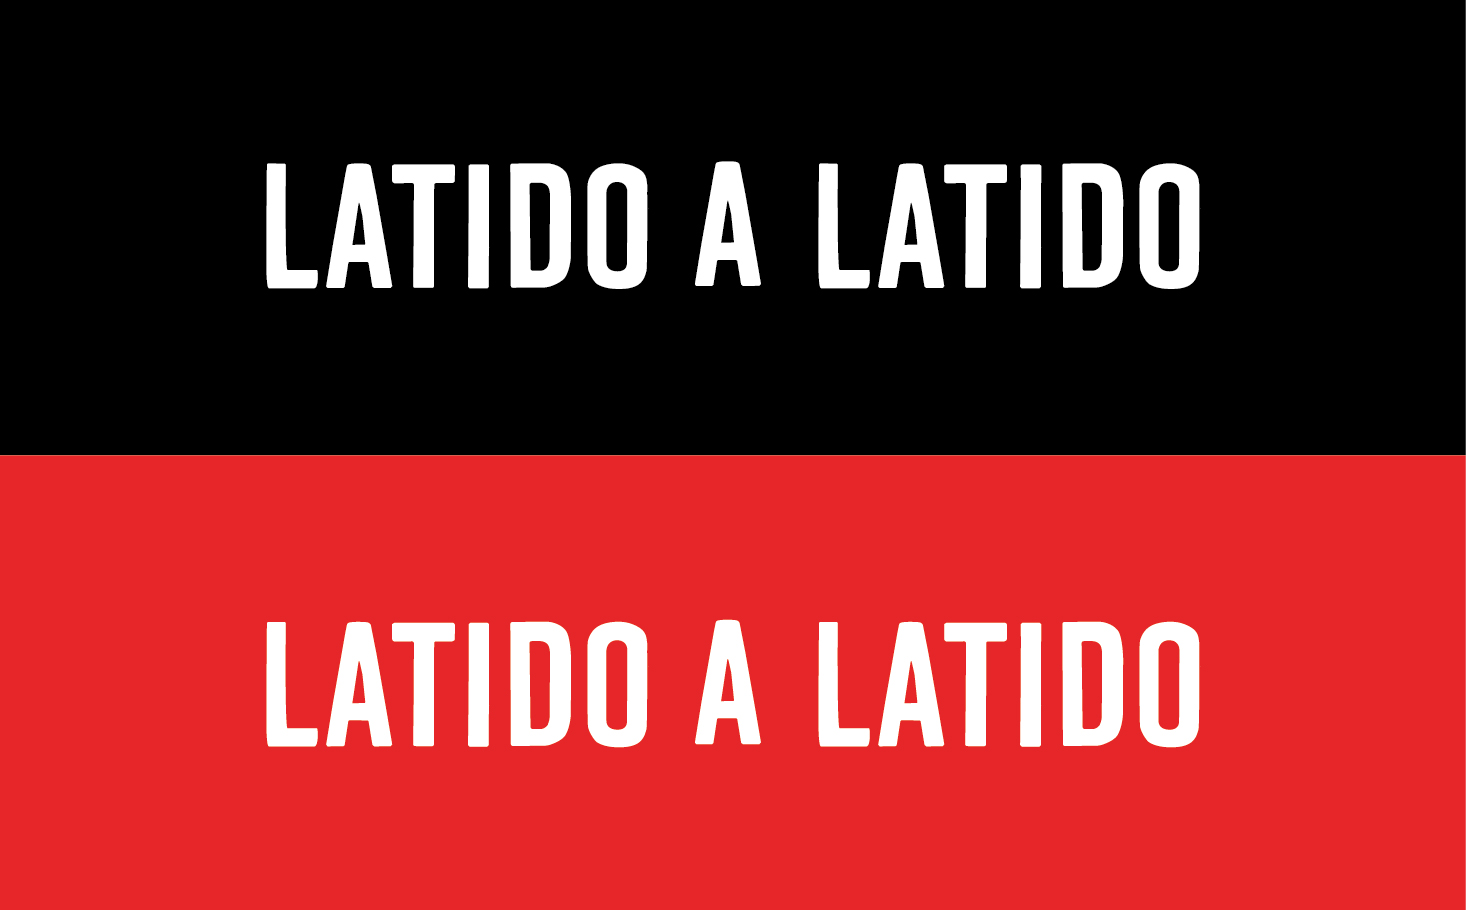 Latido-a-Latido-02-02.jpg